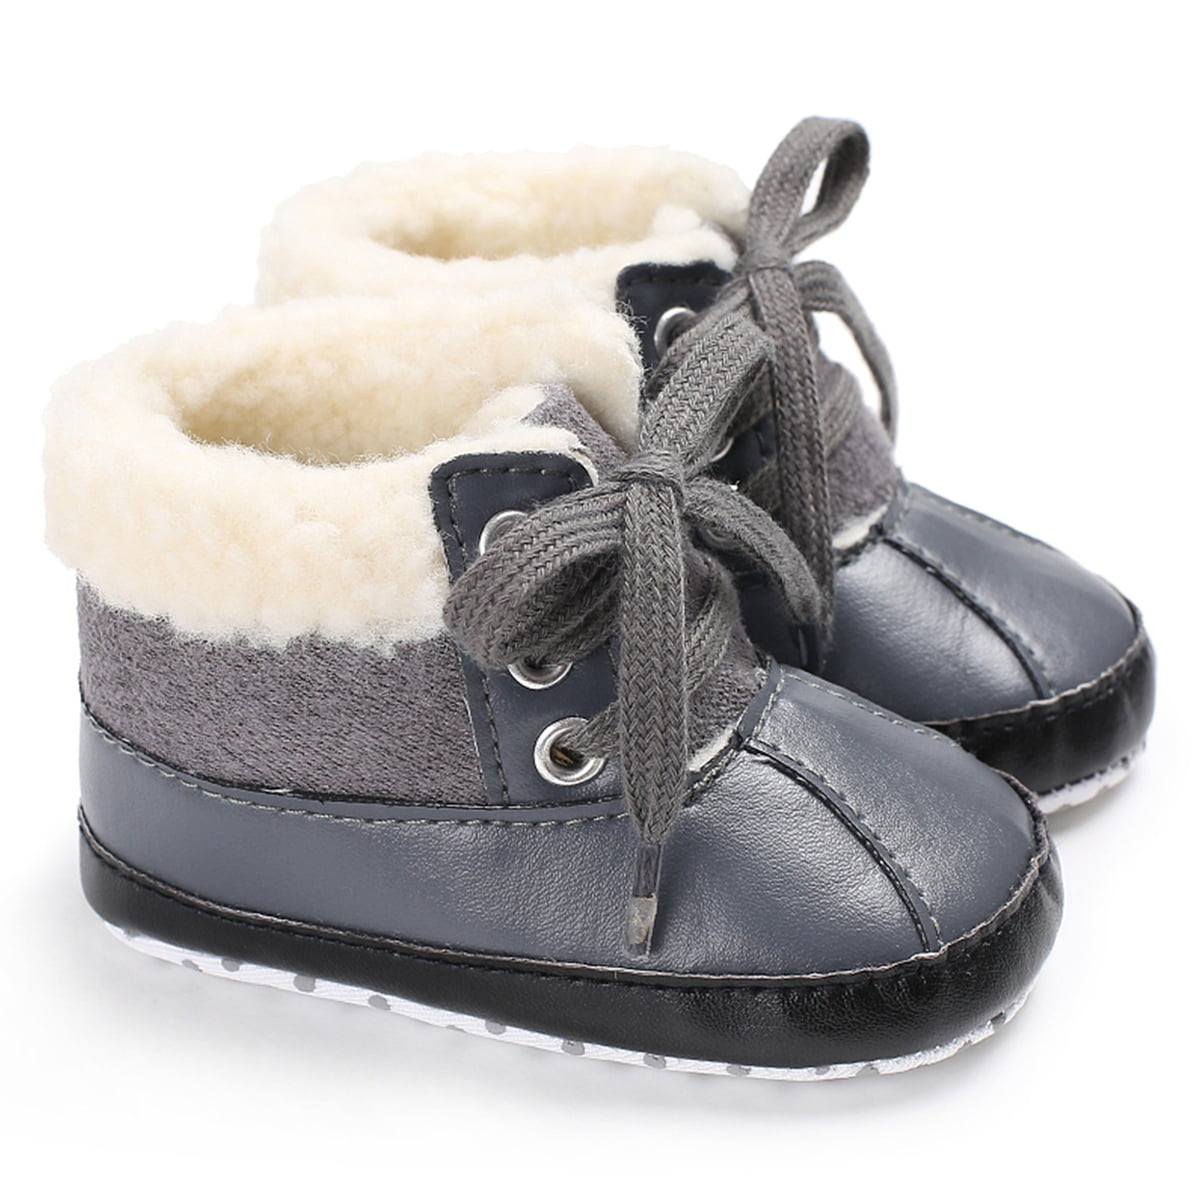 Infant Snow Boots Toddler Girls Boys Soft Sole Anti-Slip Winter Warm Prewalker Newborn Outdoor Shoes